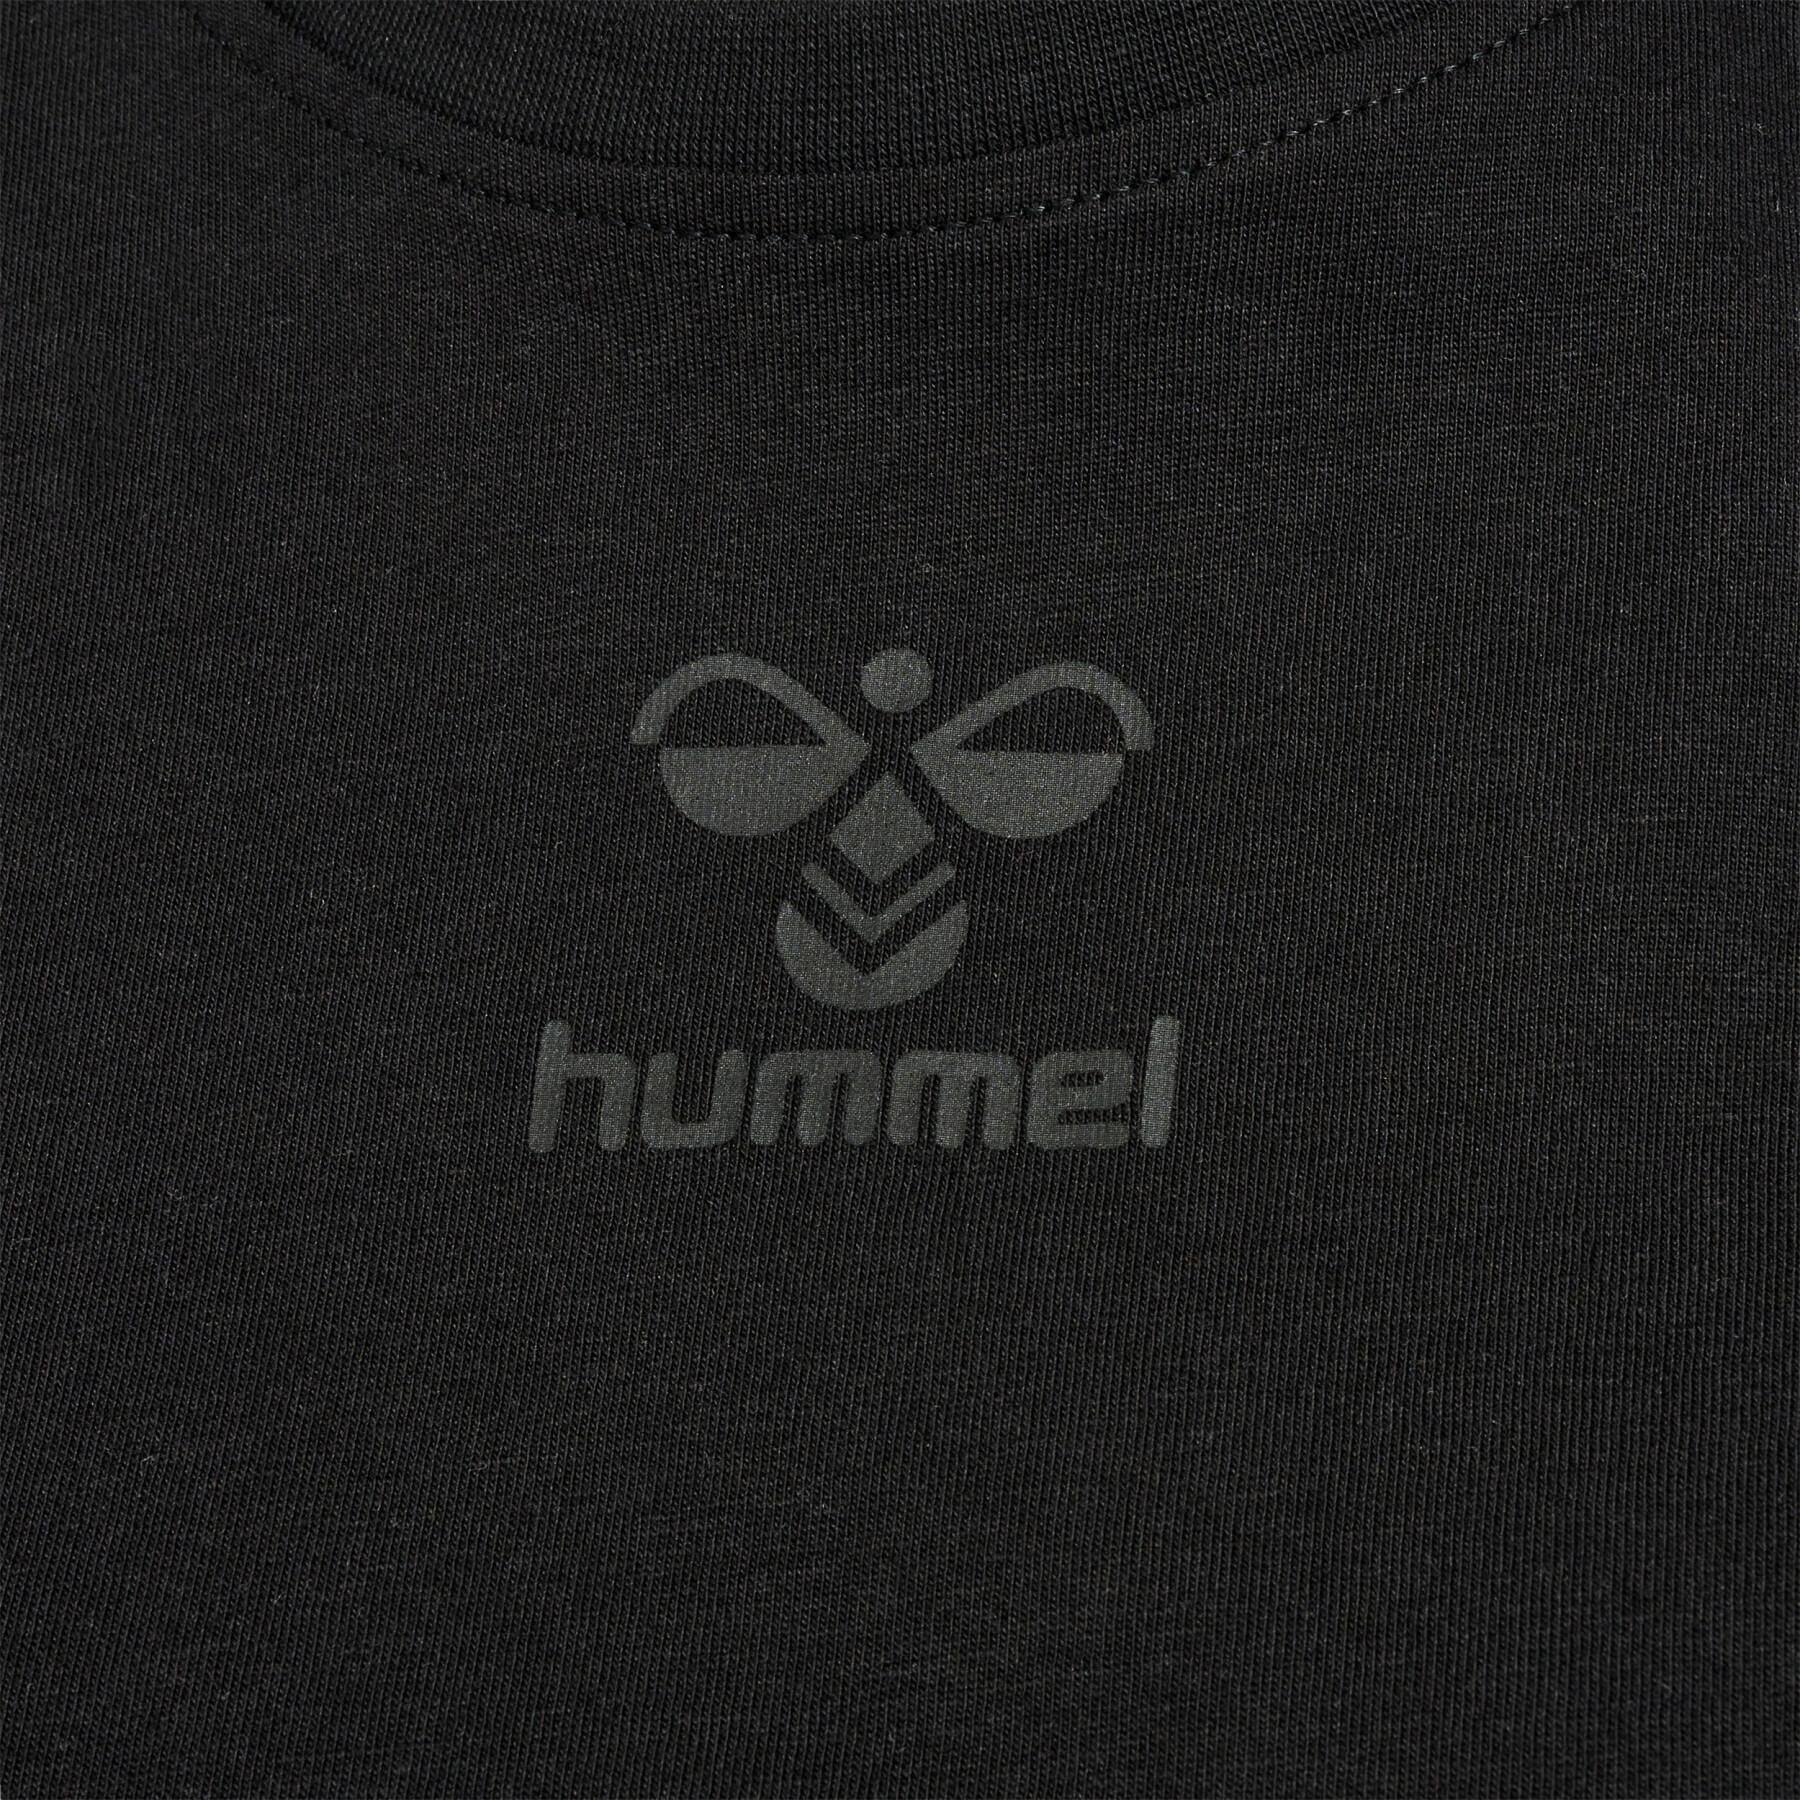 Women's T-shirt Hummel Icons - Hummel - Brands - Lifestyle